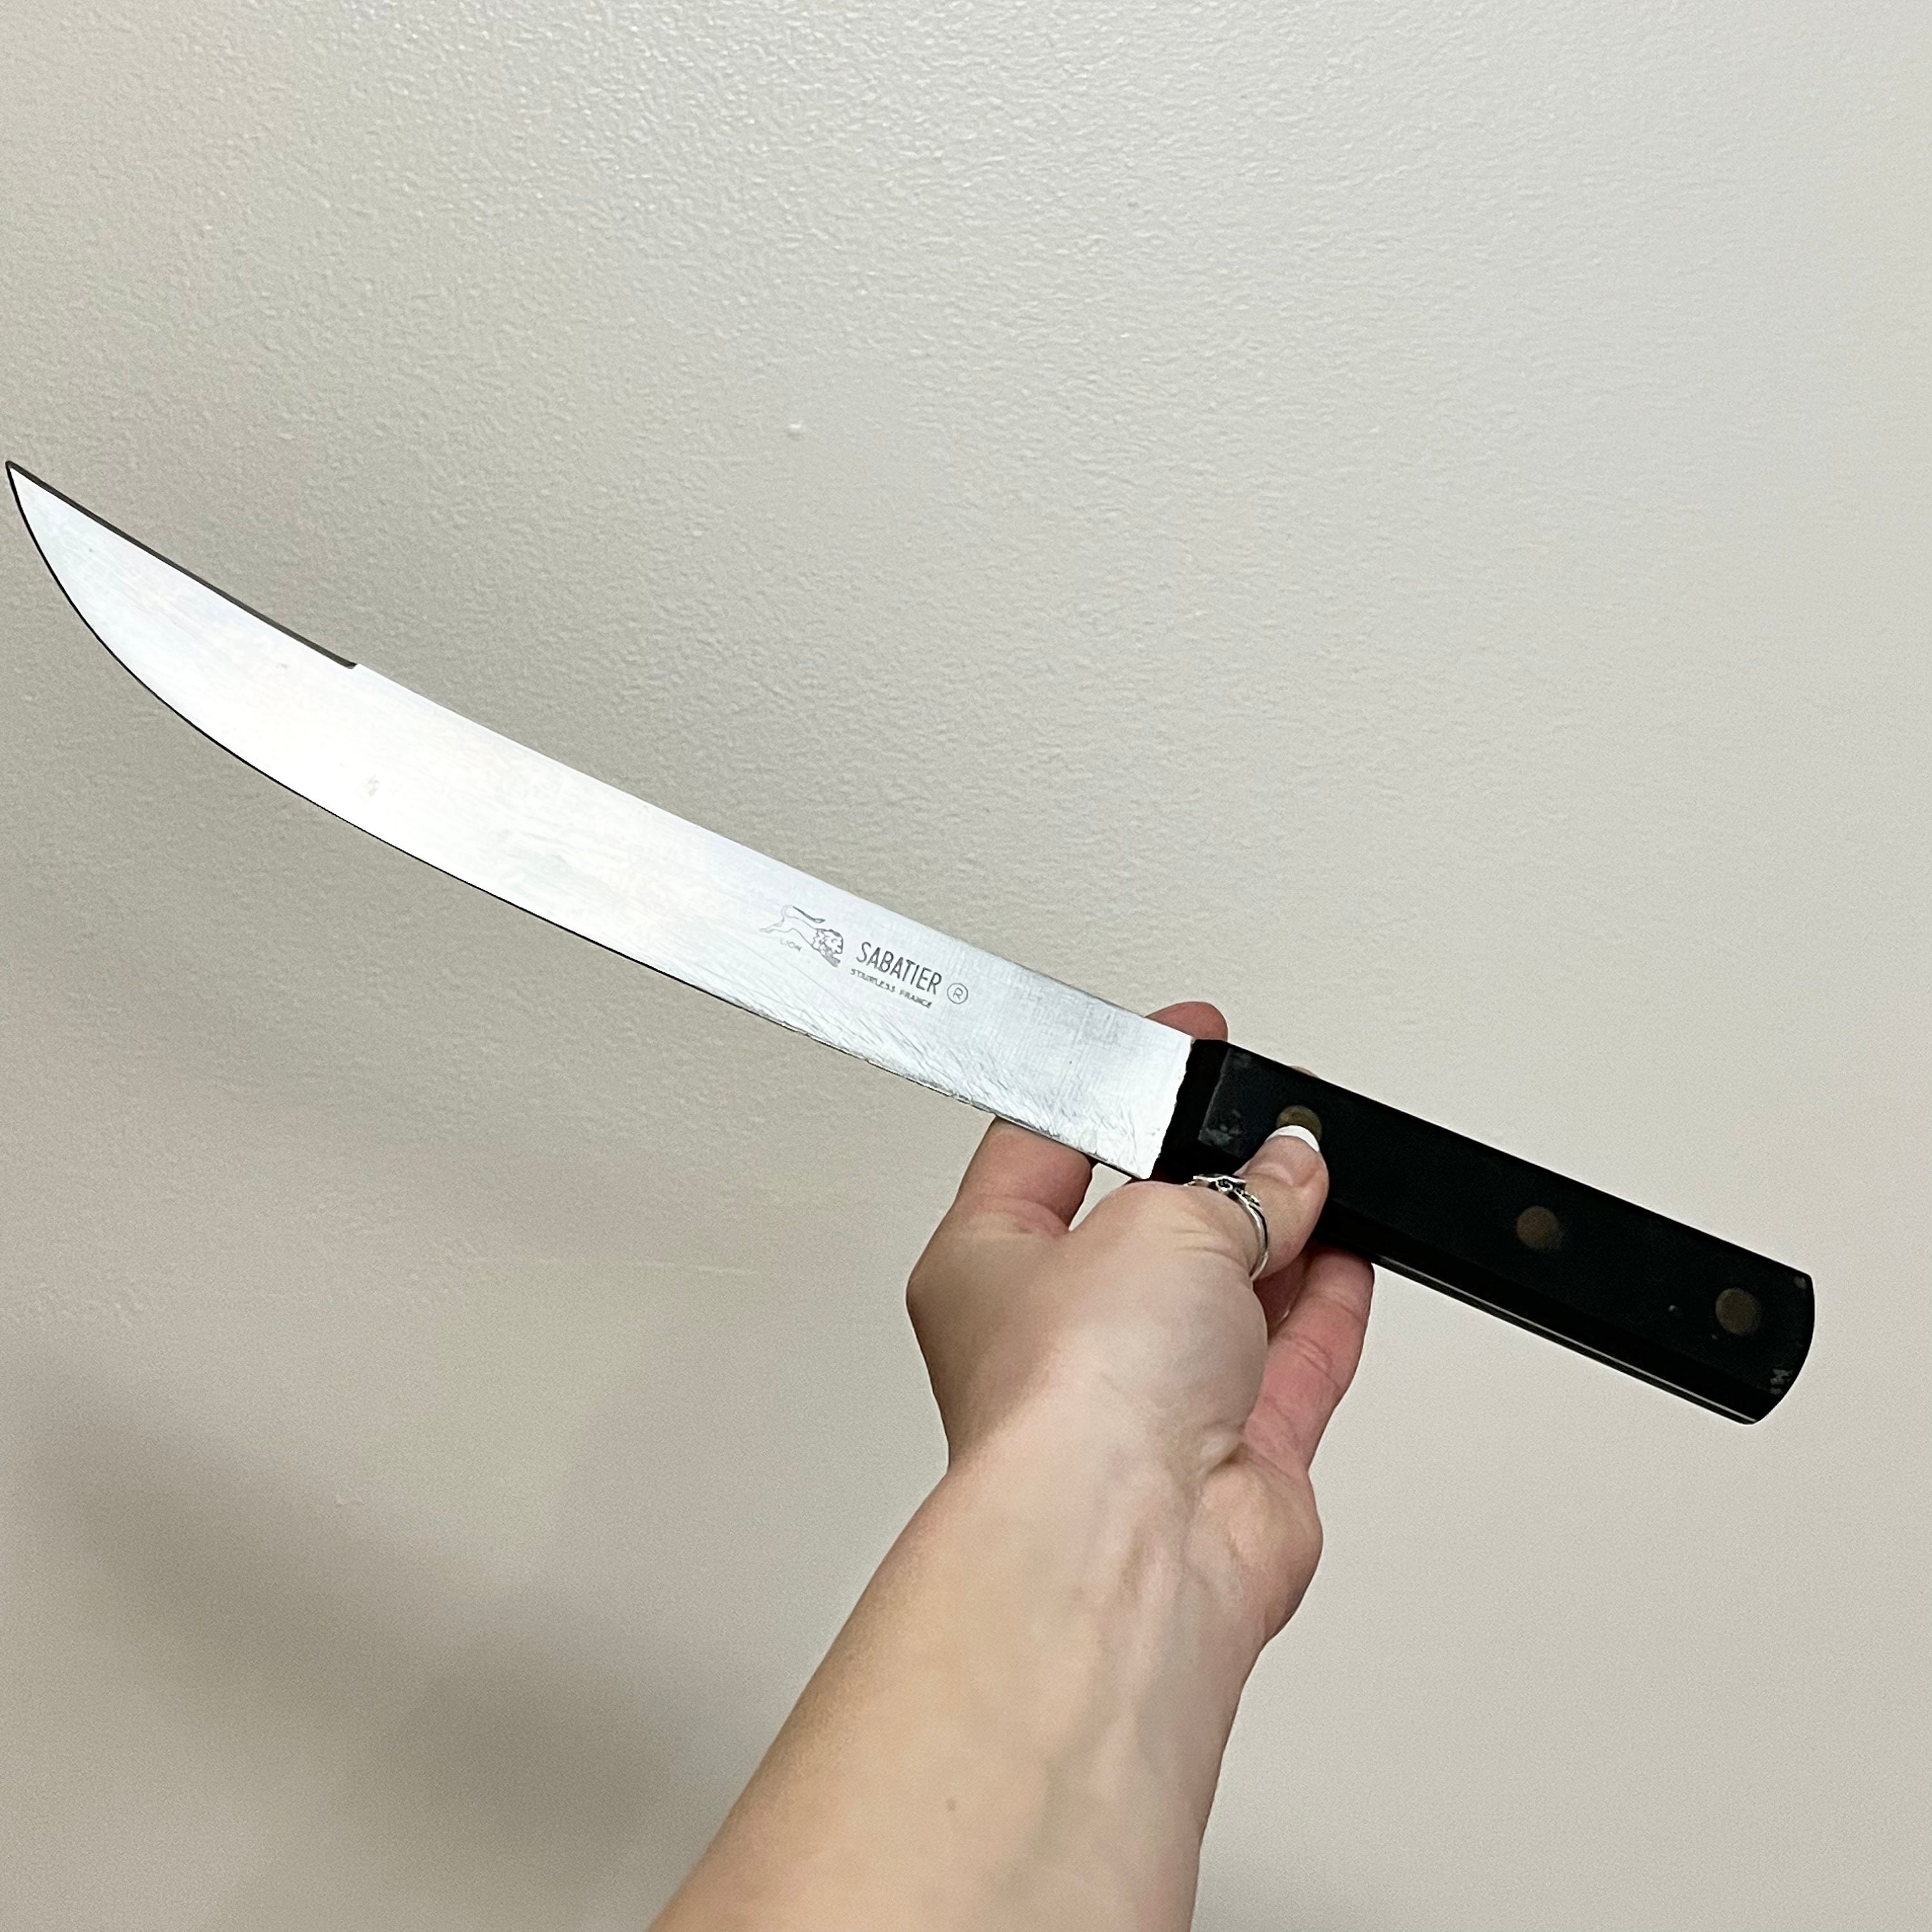 Sabatier 5 piece knife set : r/Costco